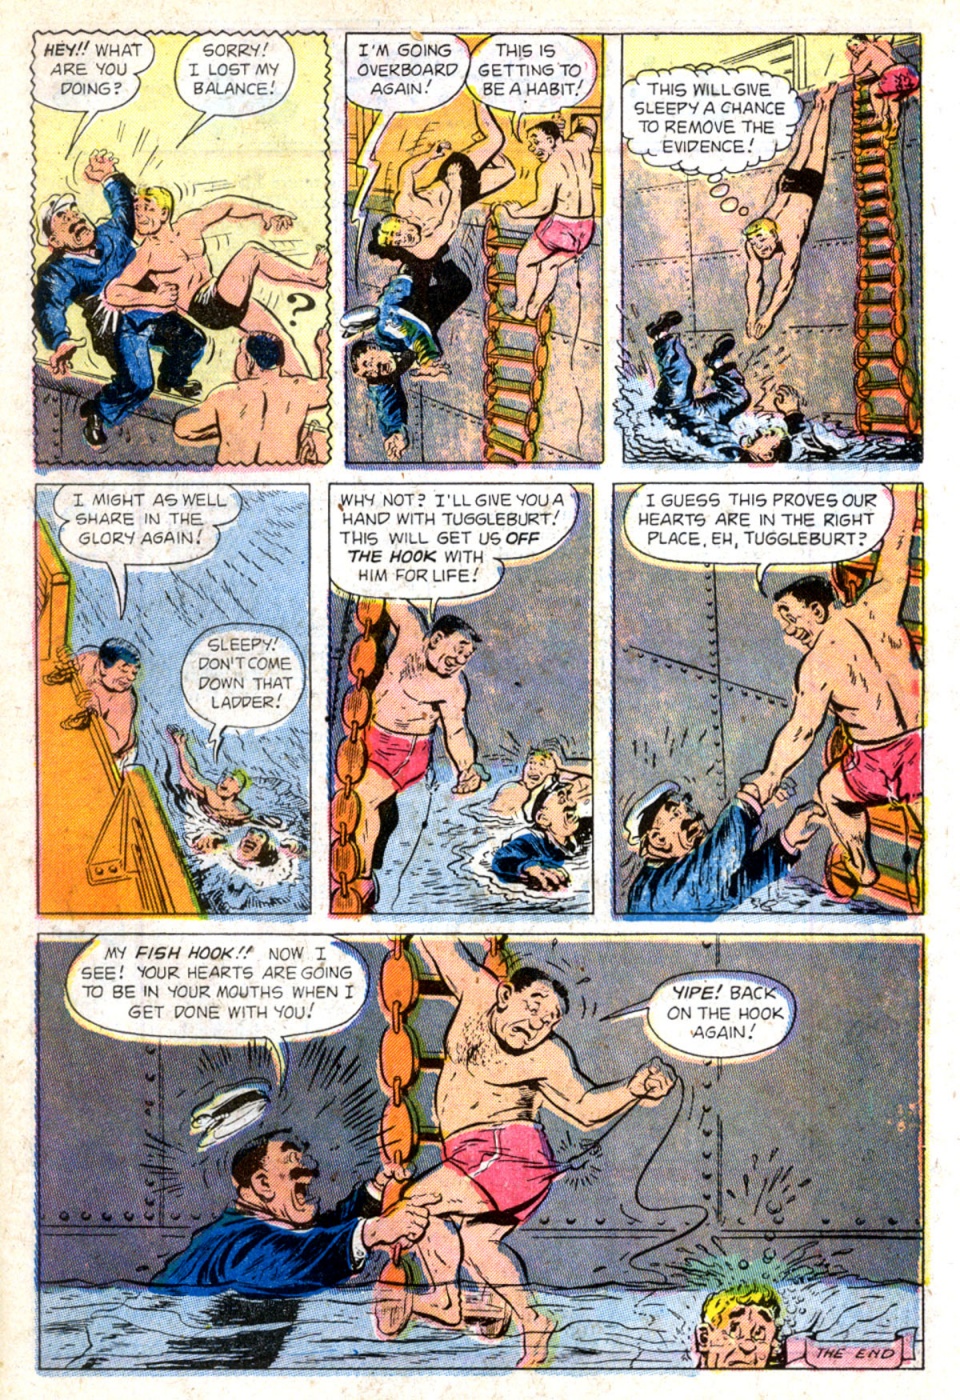 Anchors the Salt Water Daffy - Comics (b) (25)